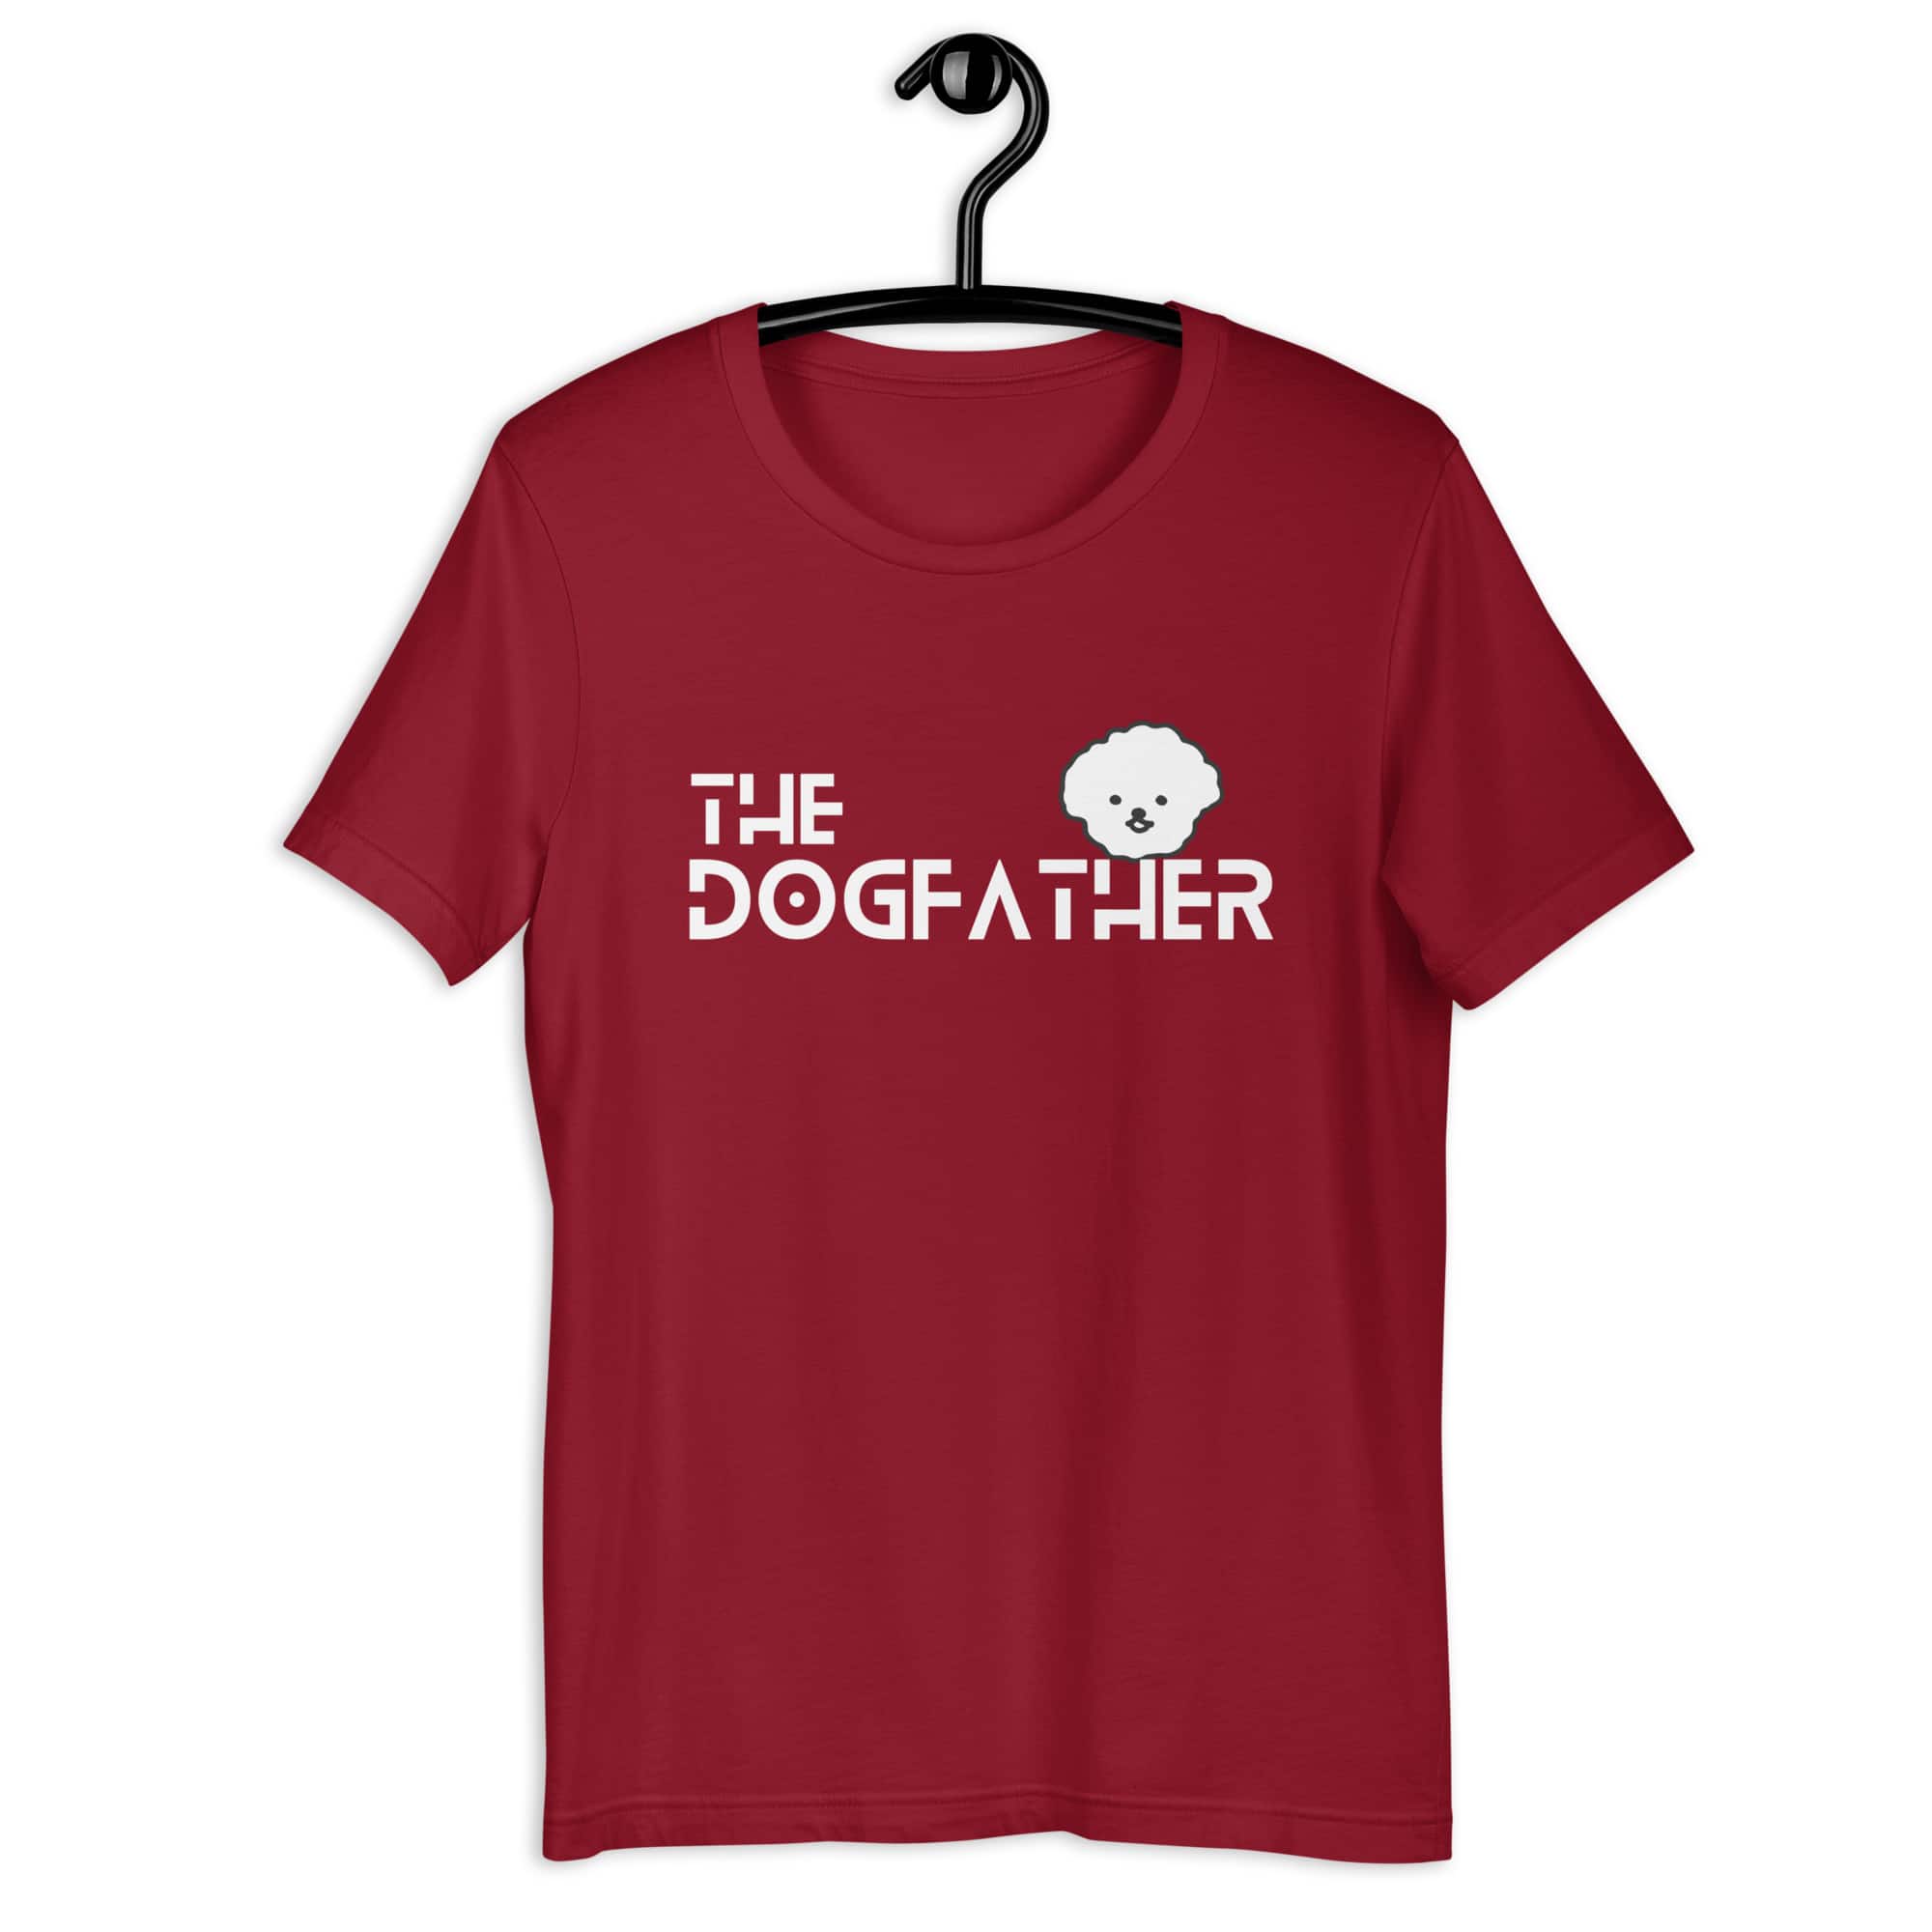 The Dogfather Poodles Unisex T-Shirt. Cardinal